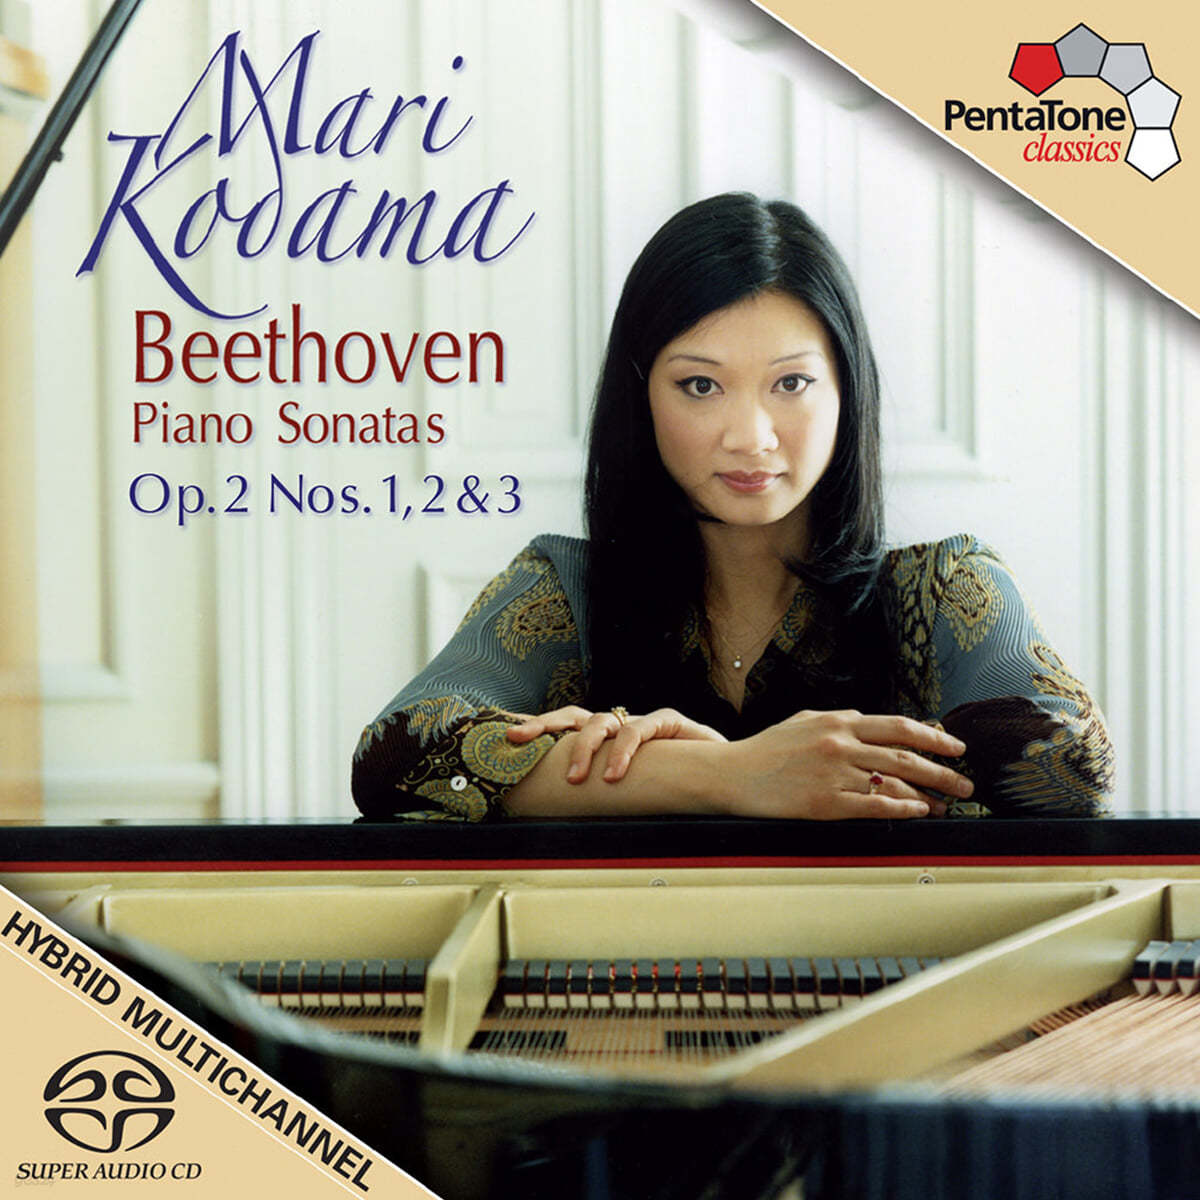 Mari Kodama 베토벤: 피아노 소나타 1, 2, 3번 - 마리 코다마 (Beethoven: Piano Sonatas Op.2)